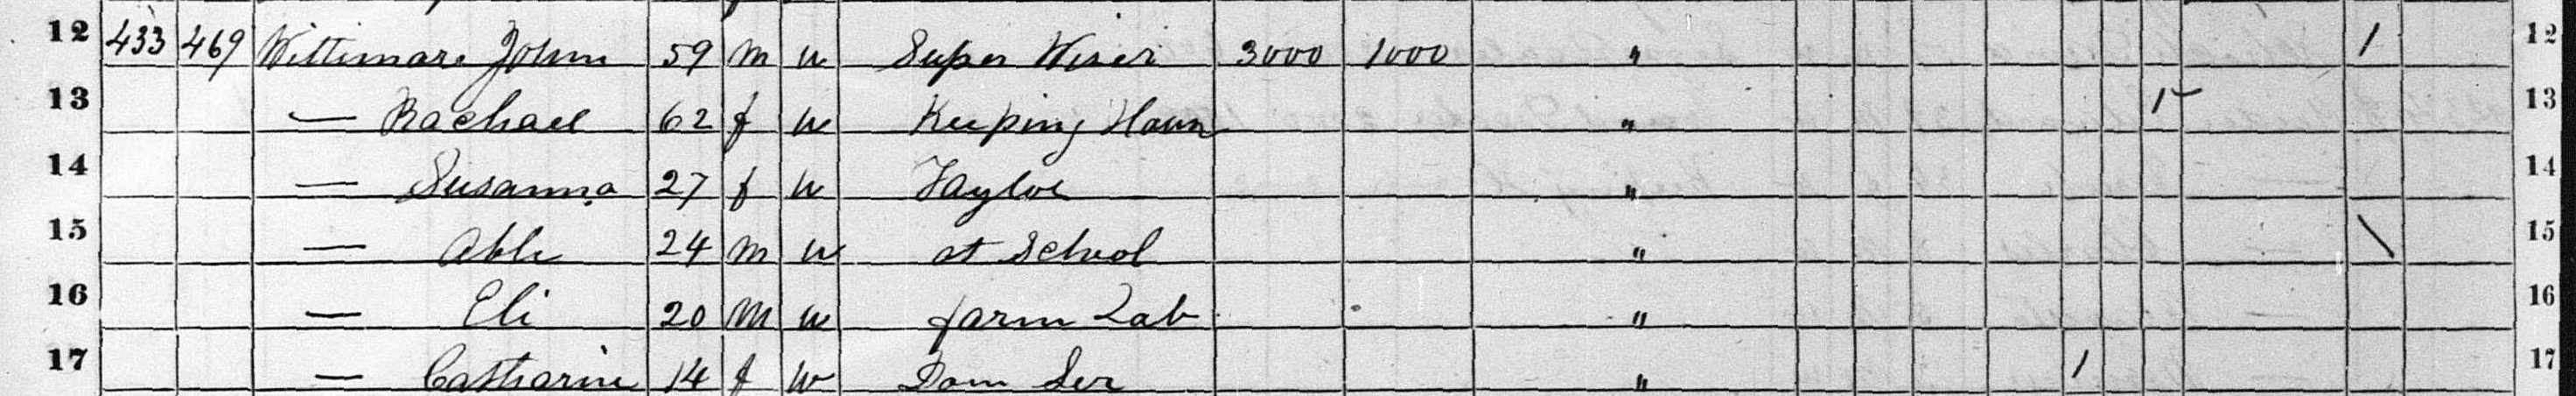 1870 John Witmer census